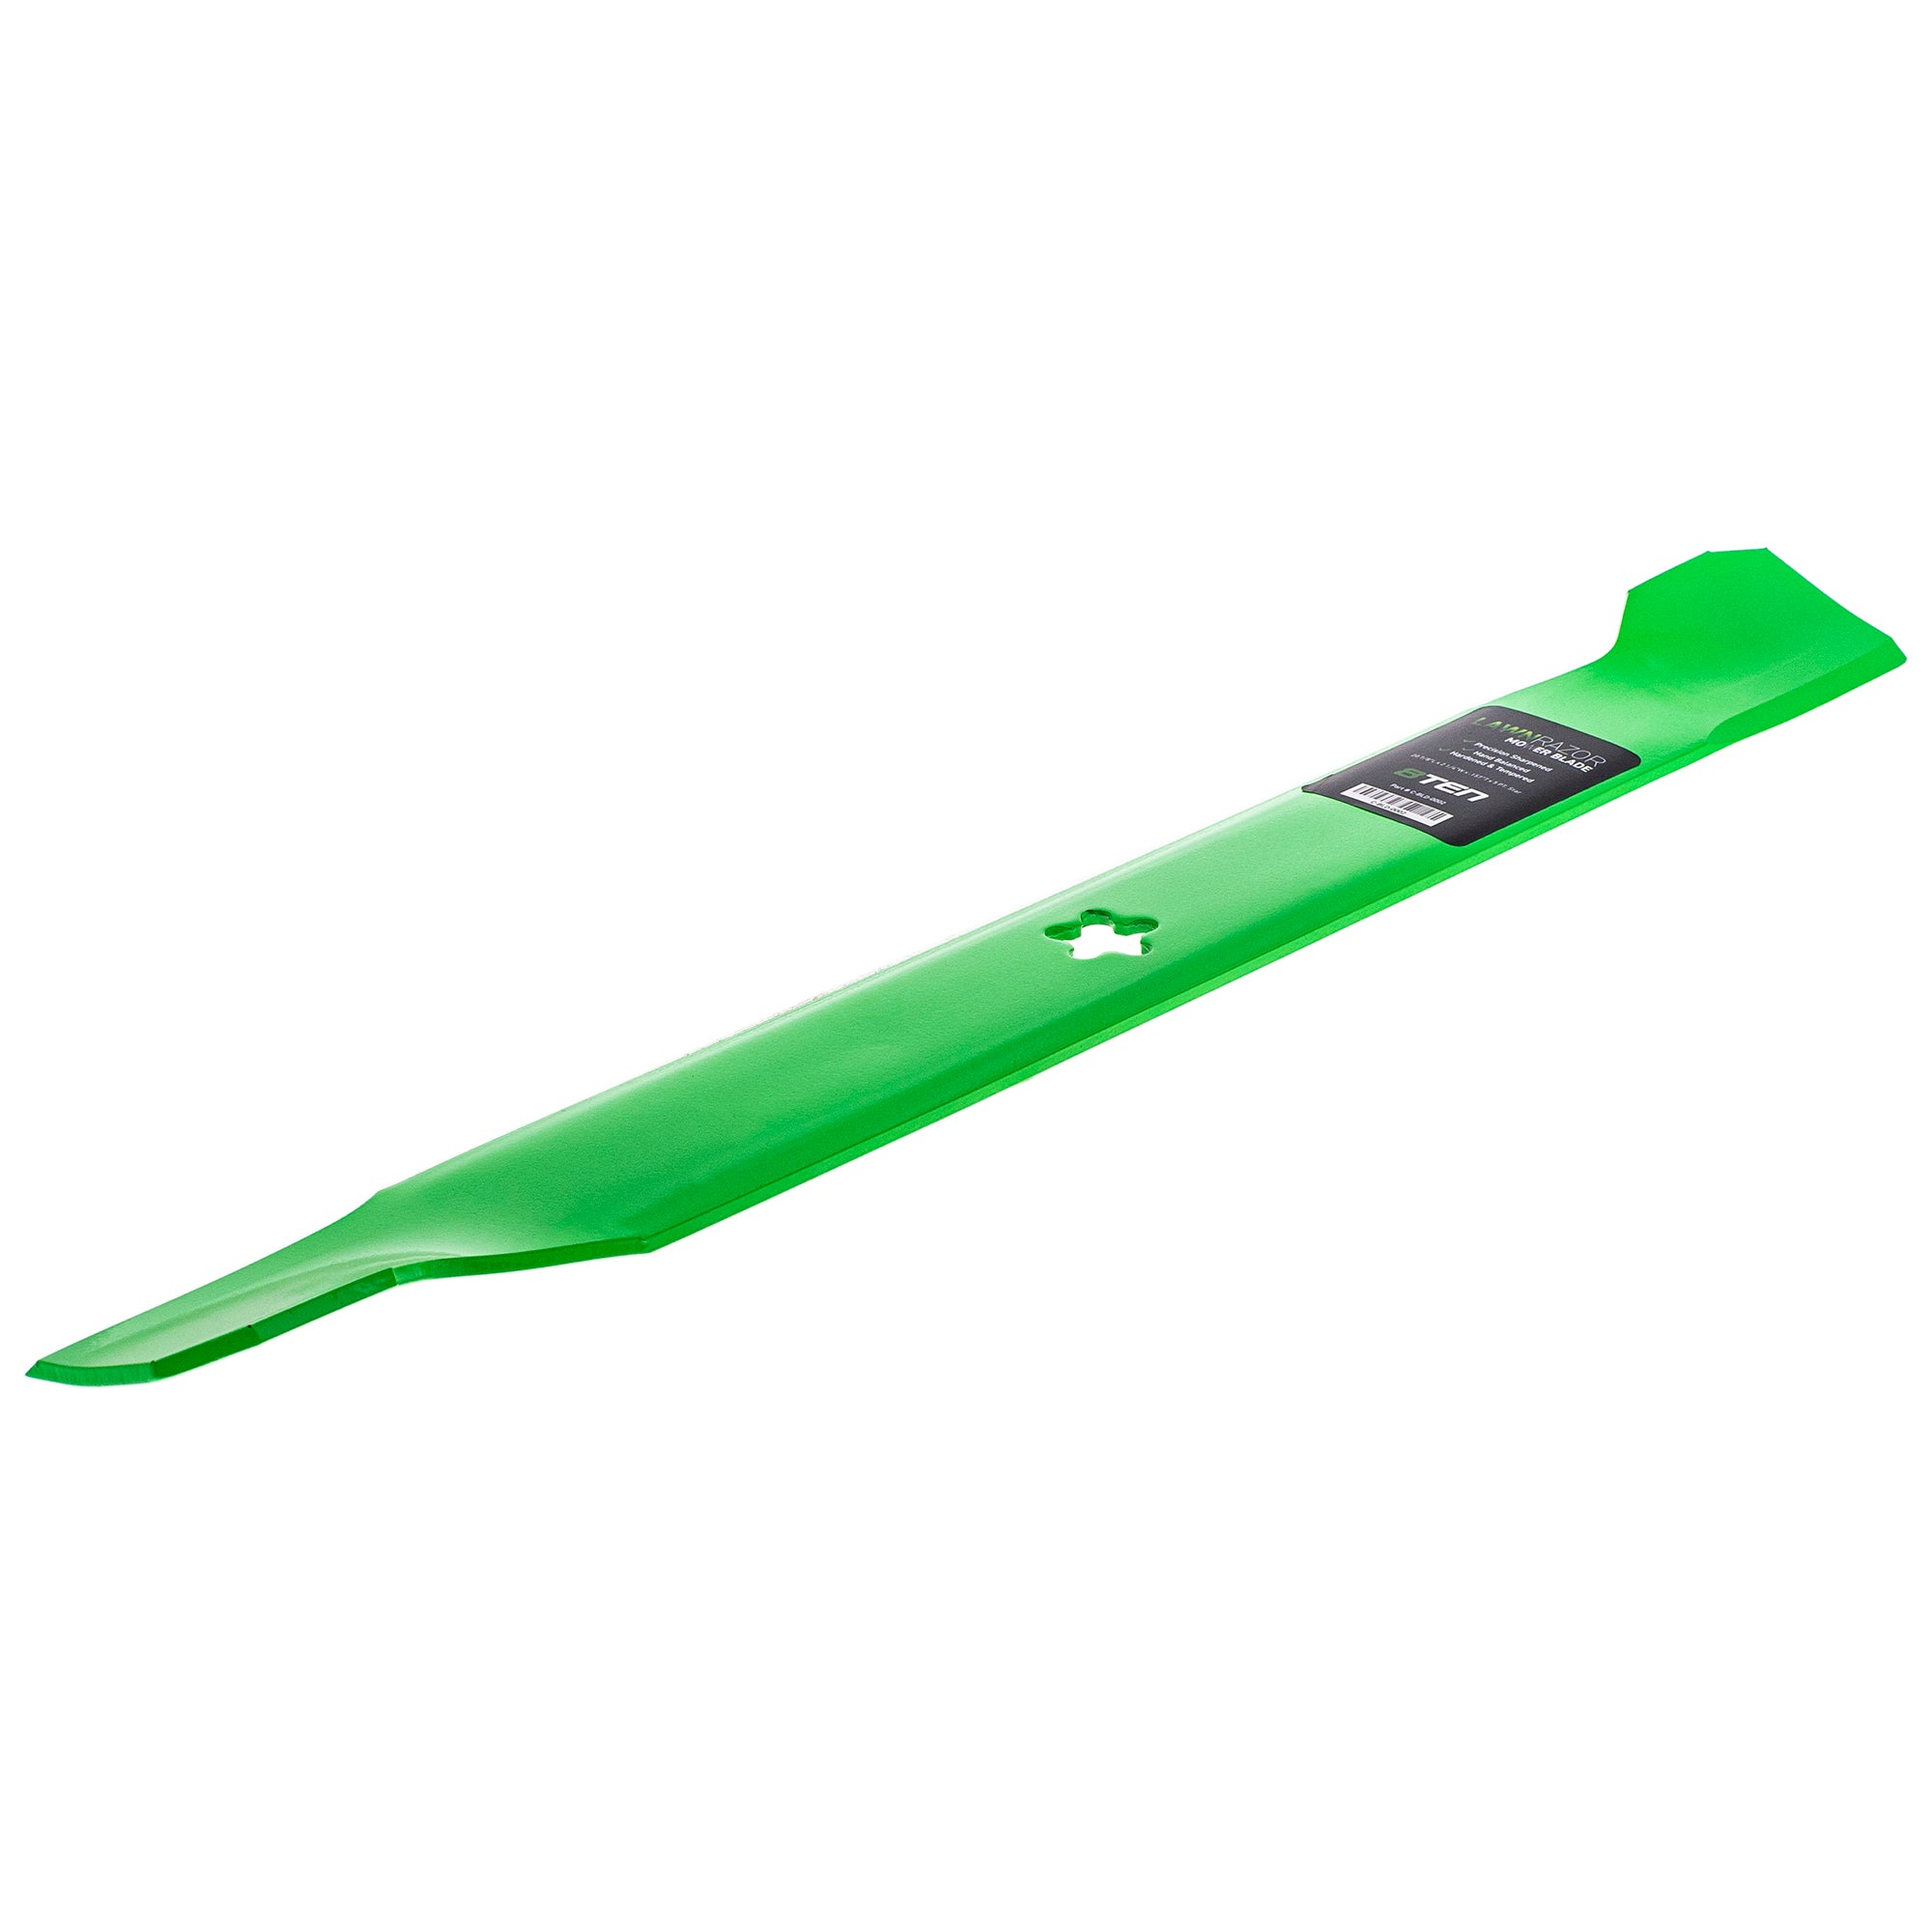 Deck Blade Spindle Kit for AYP 134149 138971 532138971 187292